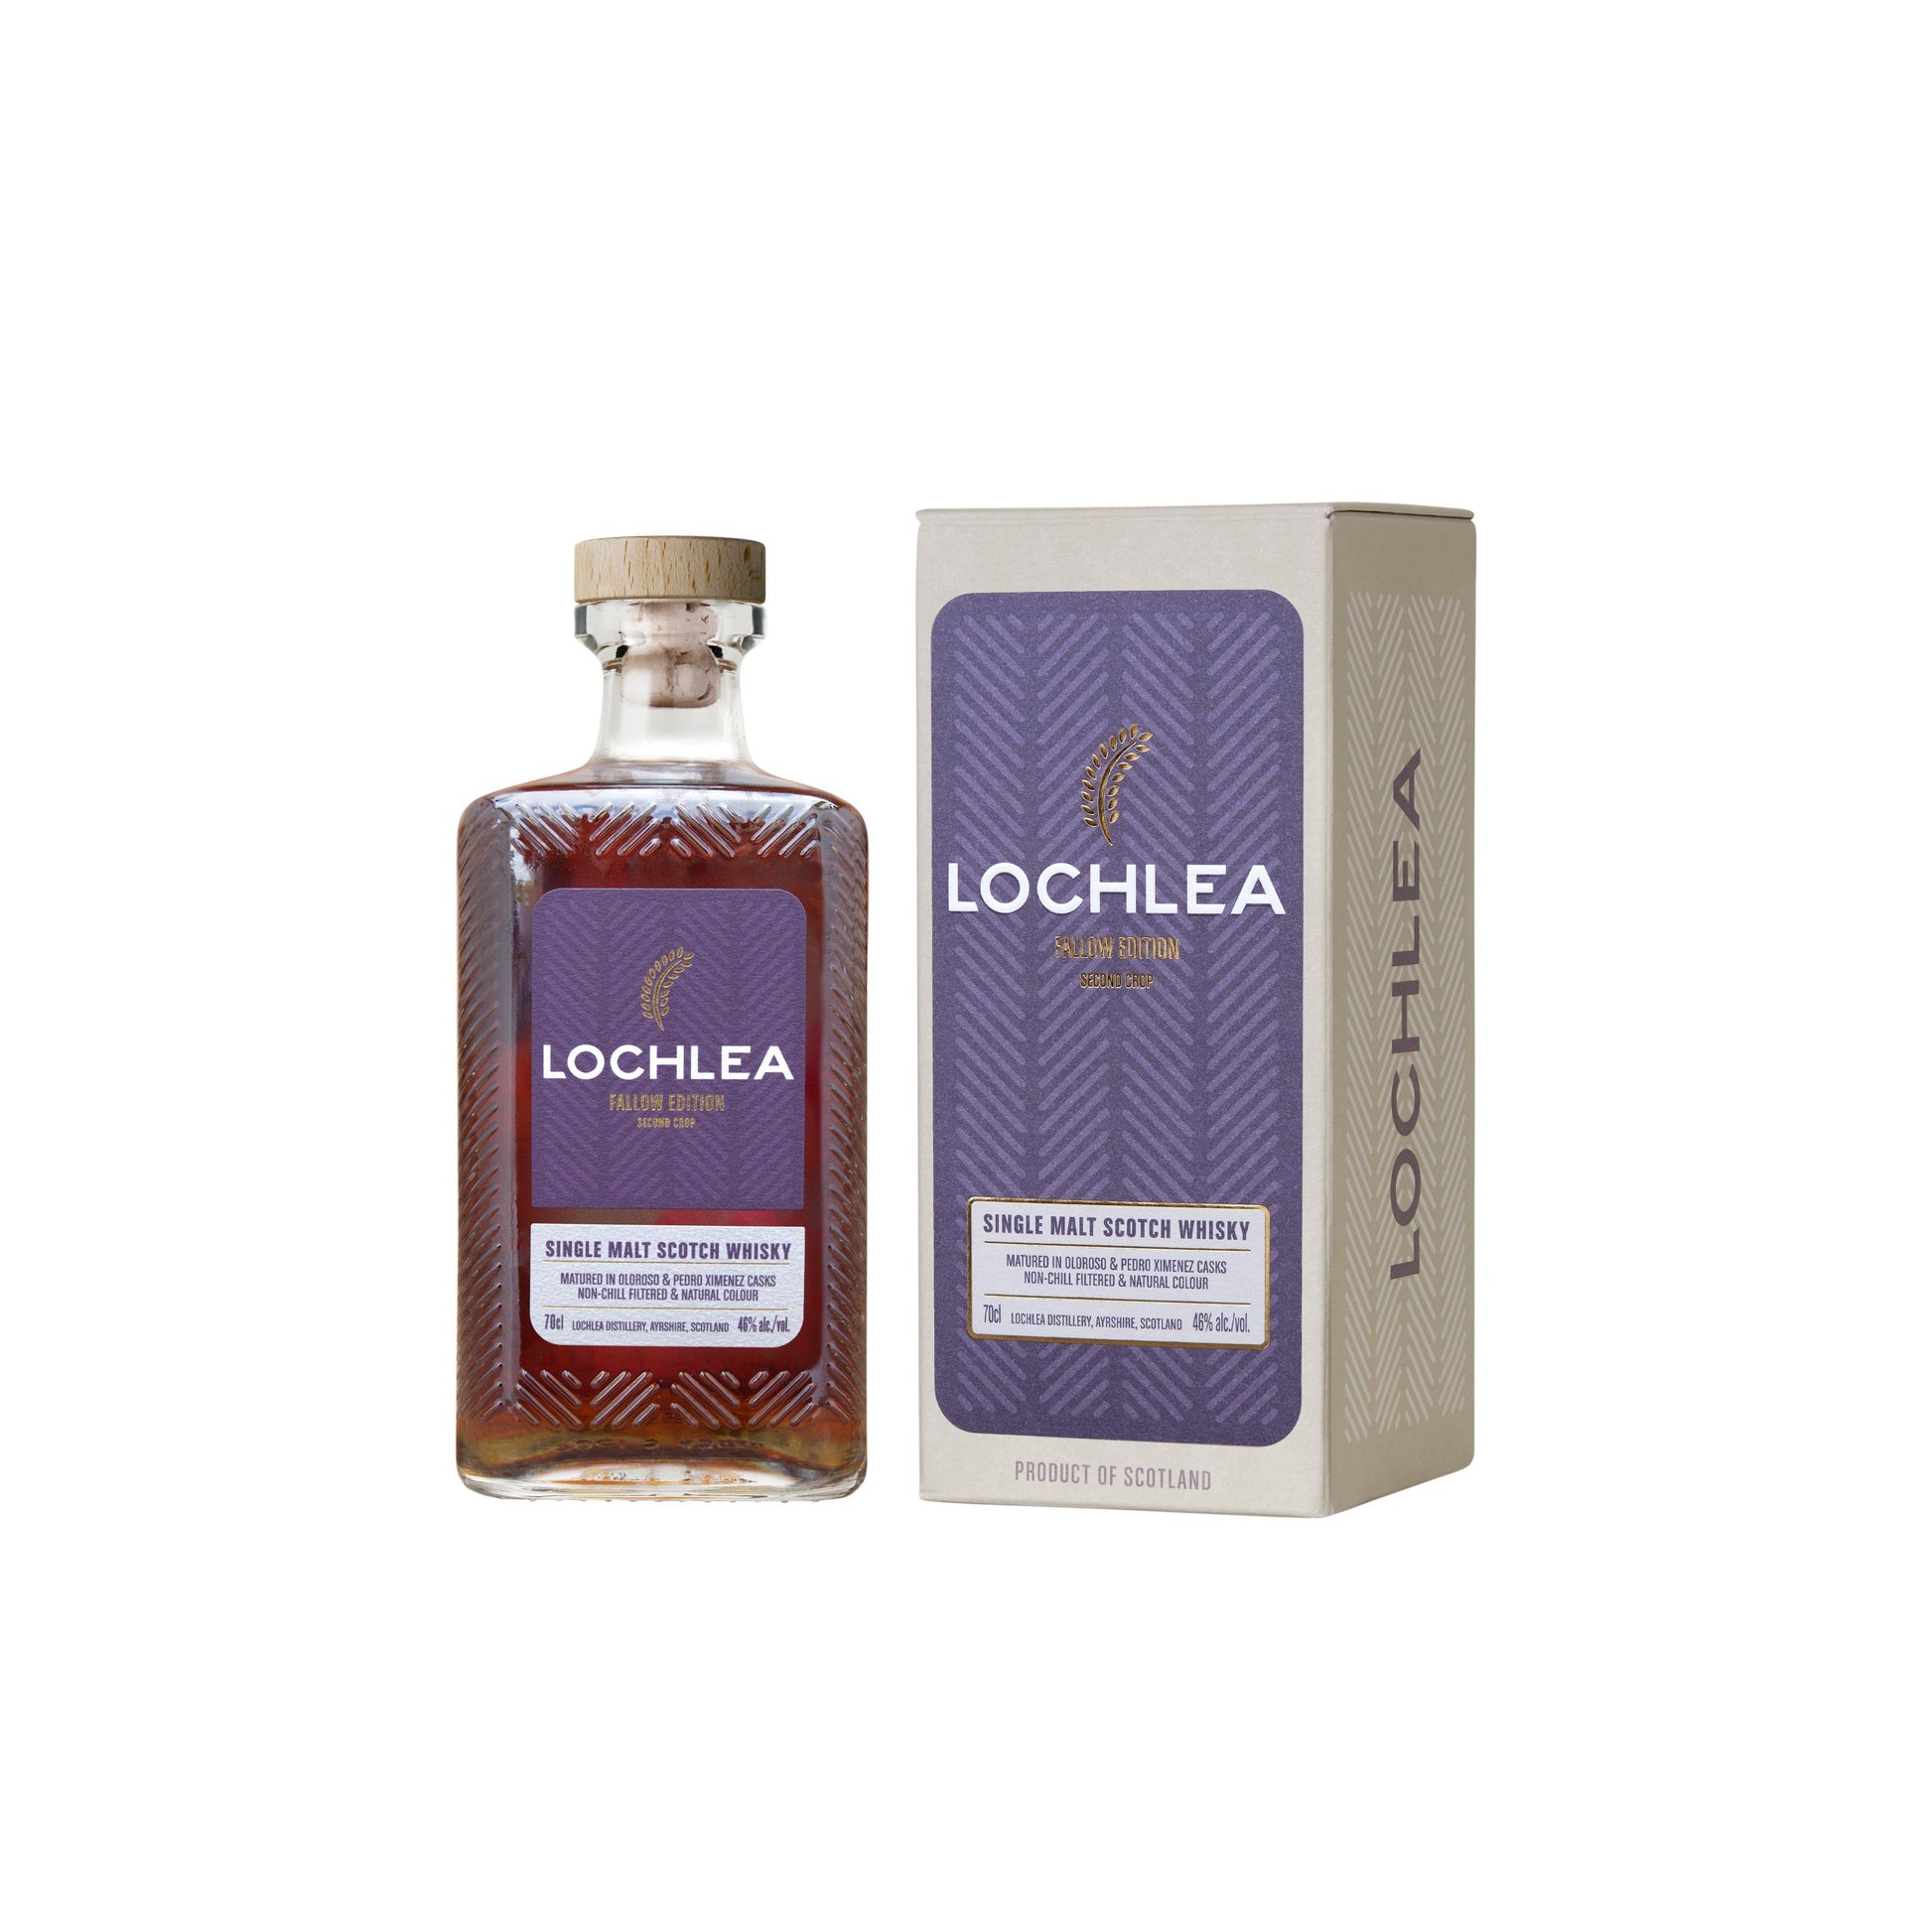 Lochlea Fallow Edition (Second Crop) - Single Malt Scotch Whisky-Single Malt Scotch Whisky-5065008253174-Fountainhall Wines